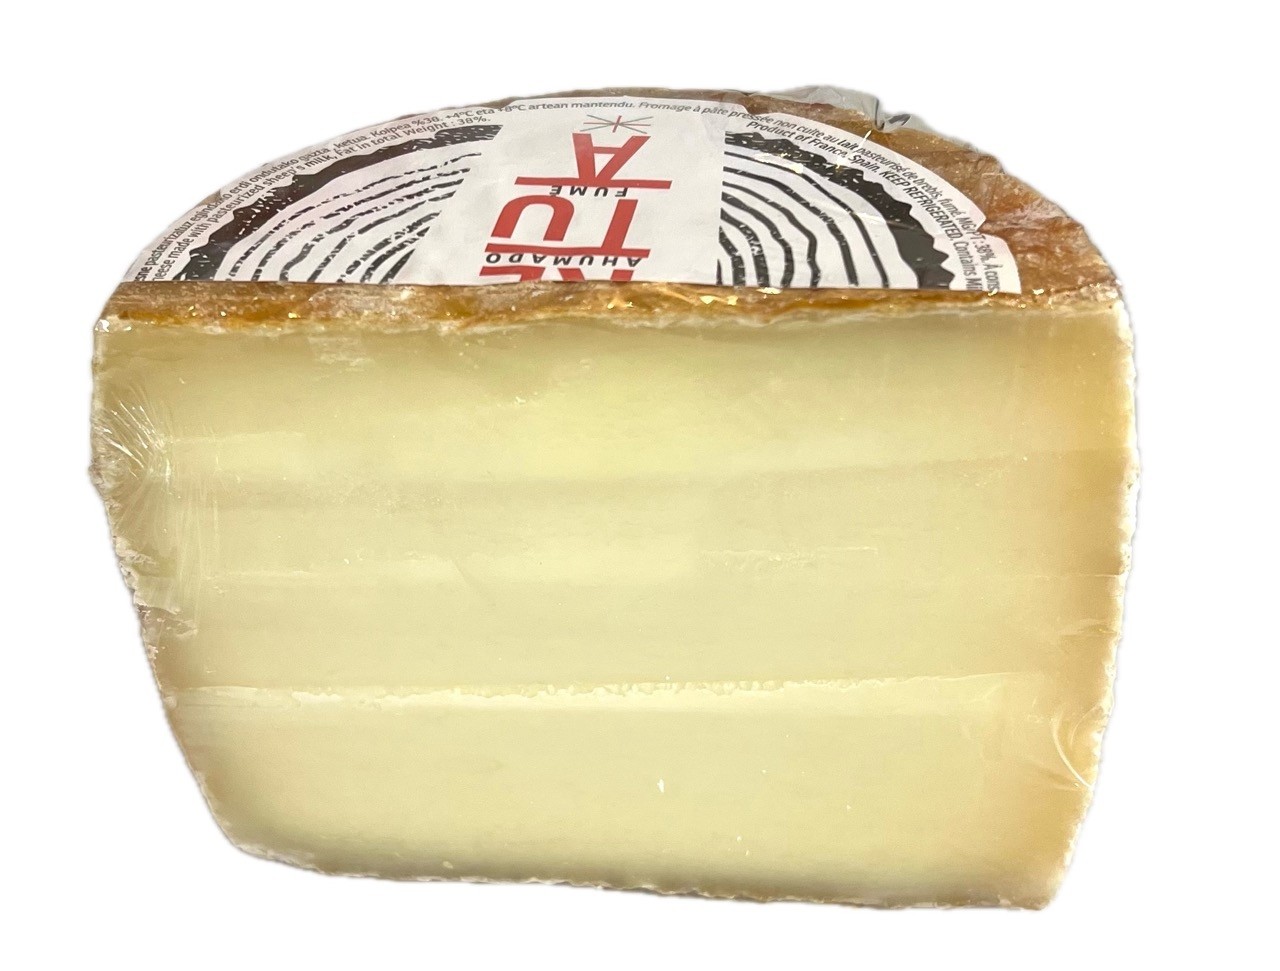 Half Smoked sheep's cheese (Agour France)